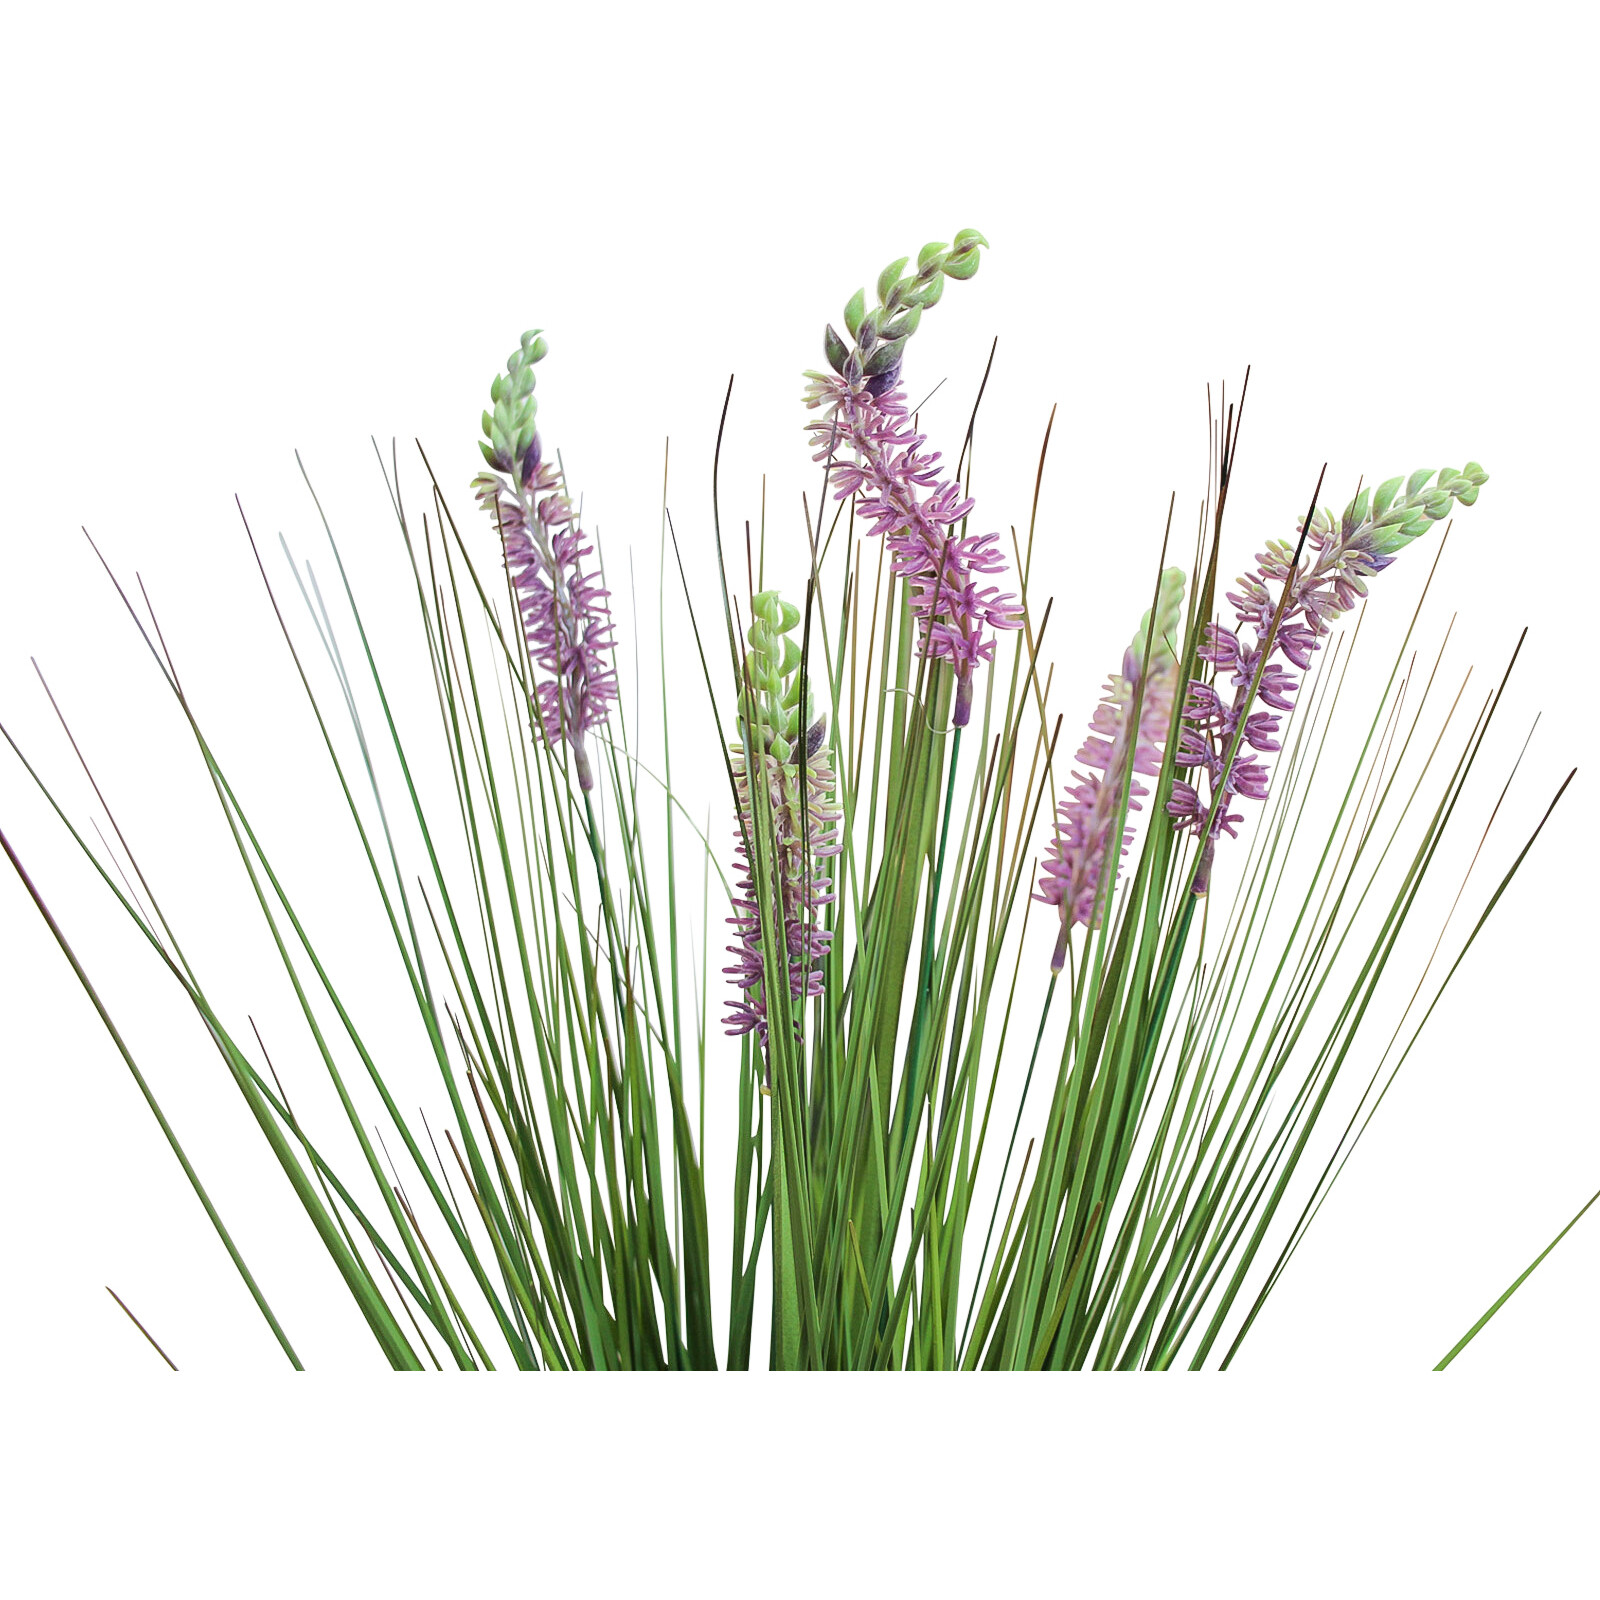 Artificial Spiky Grass Lavender